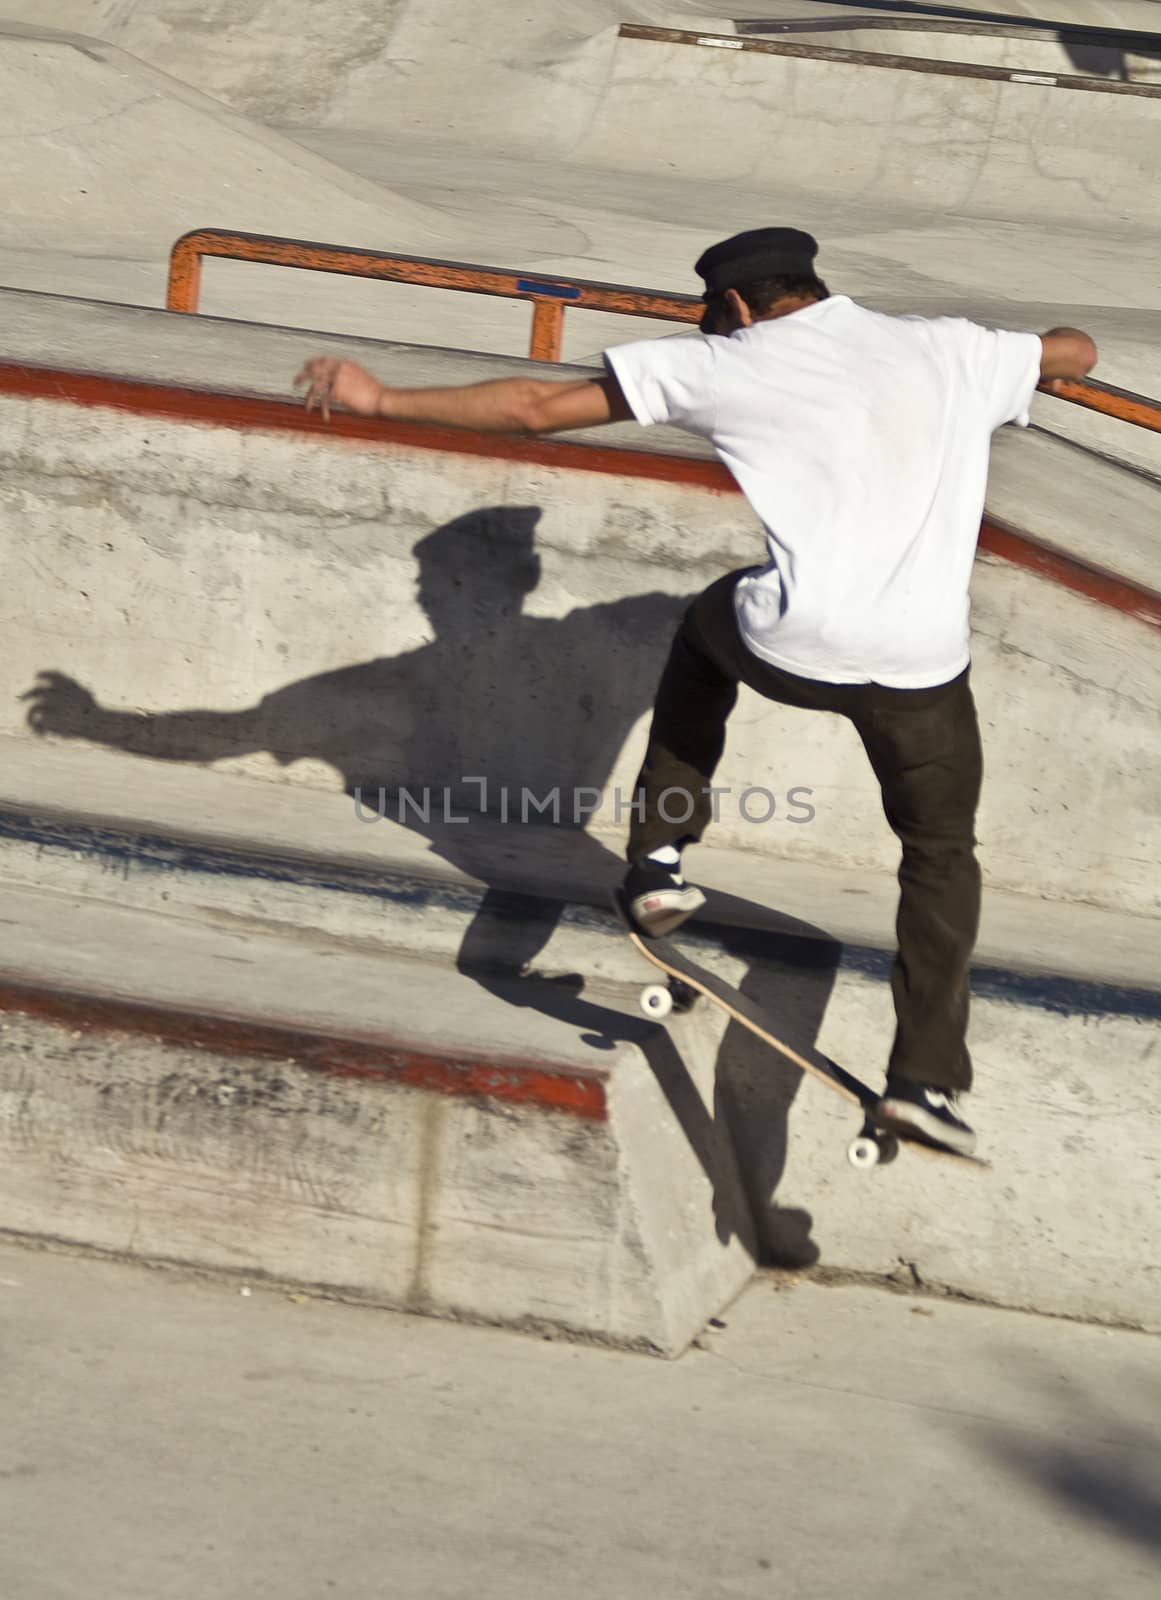 Jumping skateboarder by dunjava